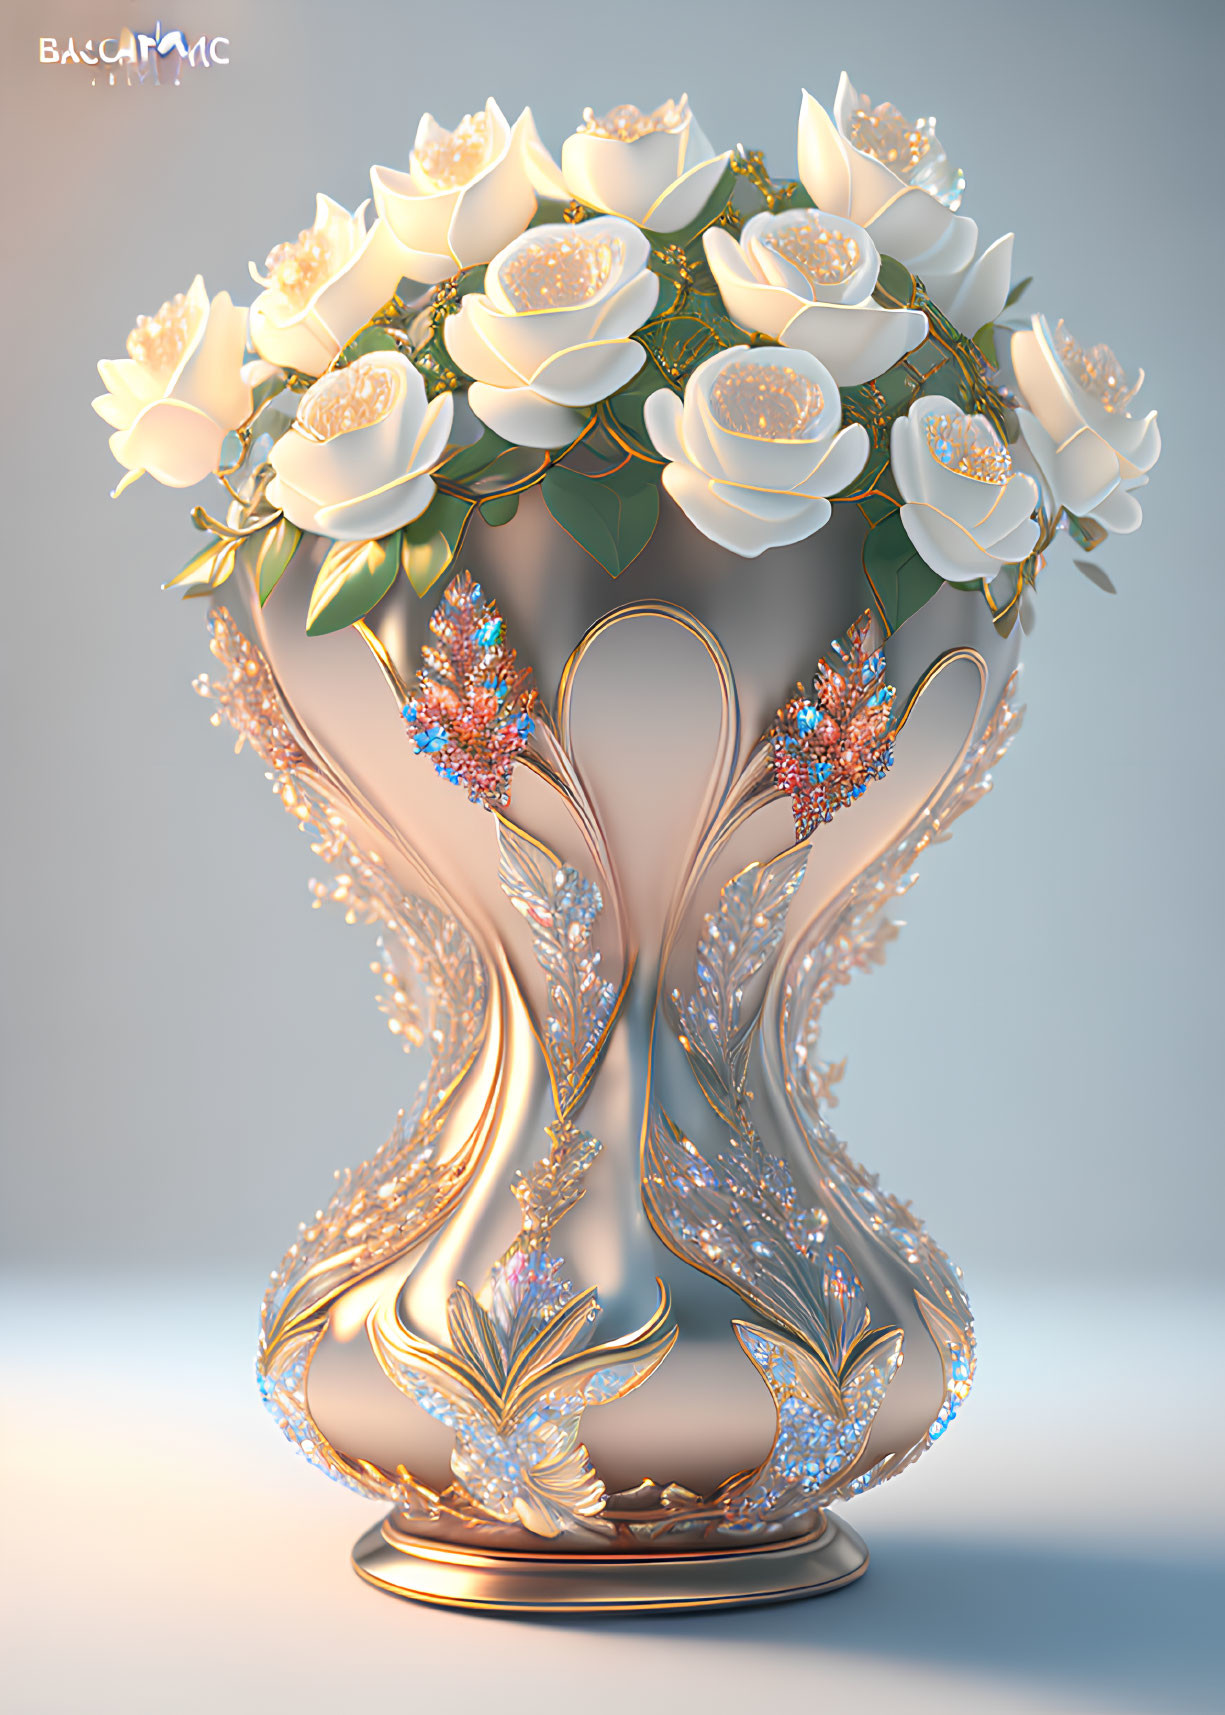 A decorative vase